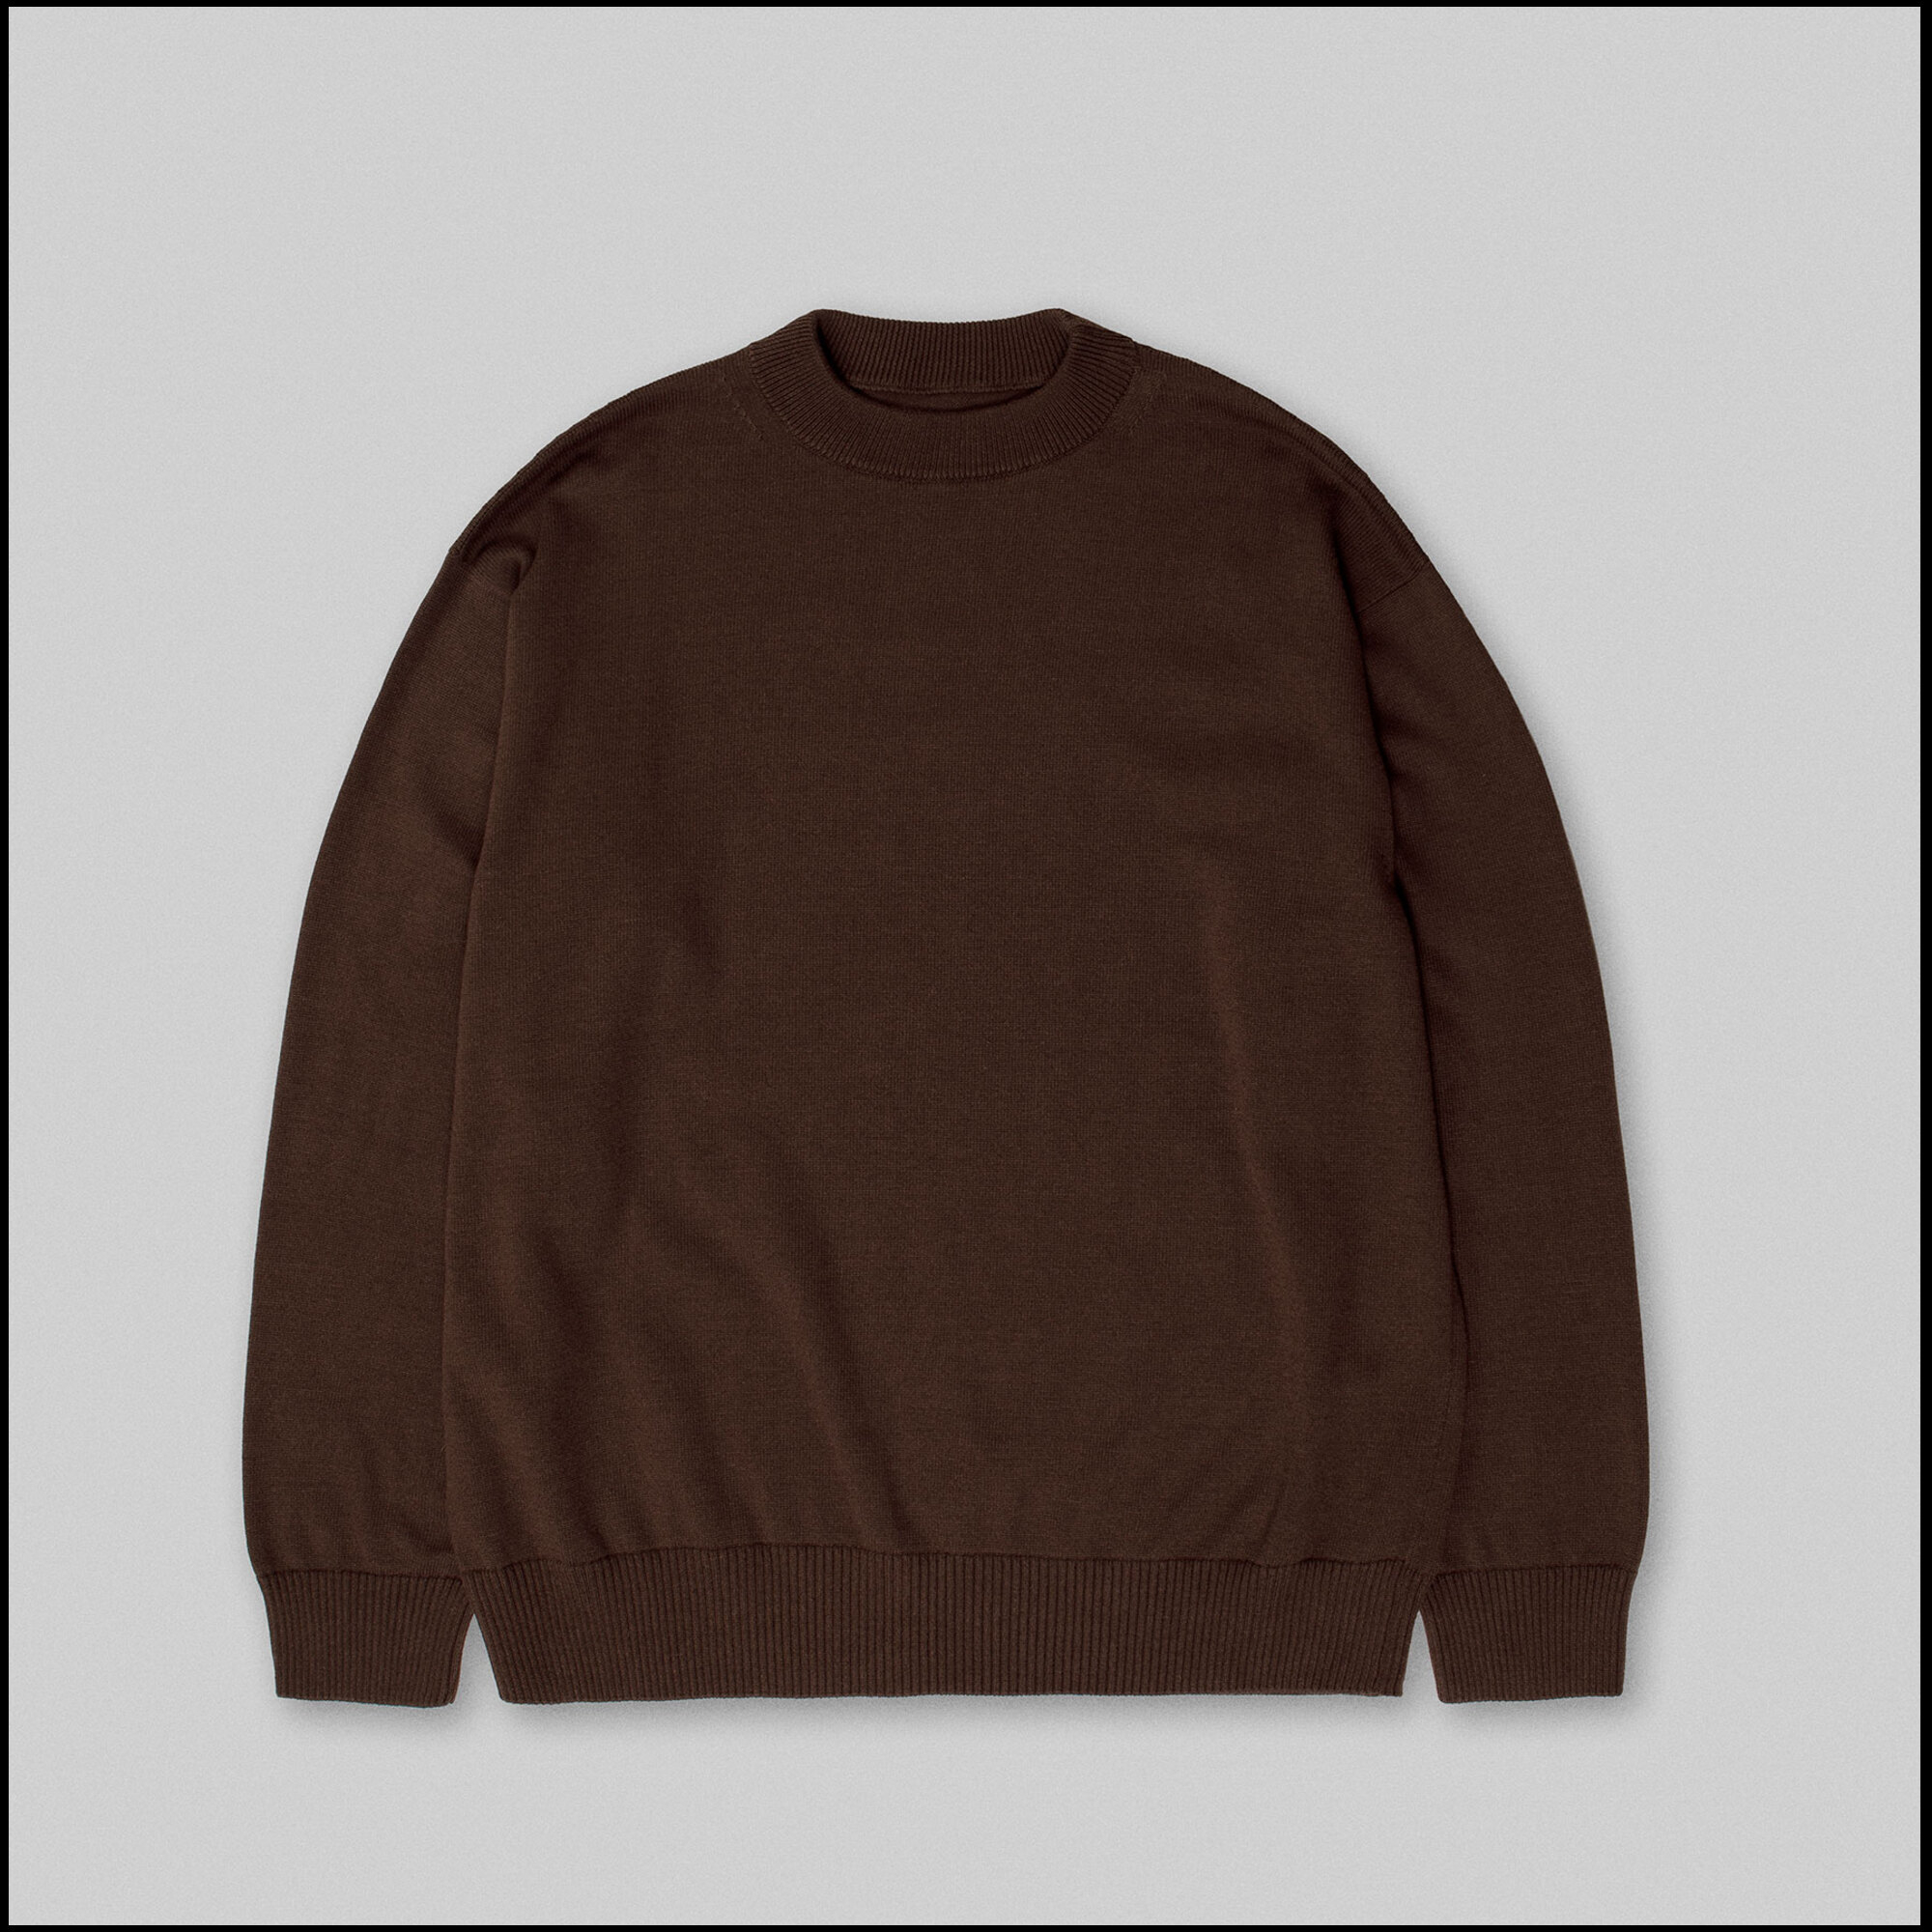 STANDARD sweater by Arpenteur in Soil brown color